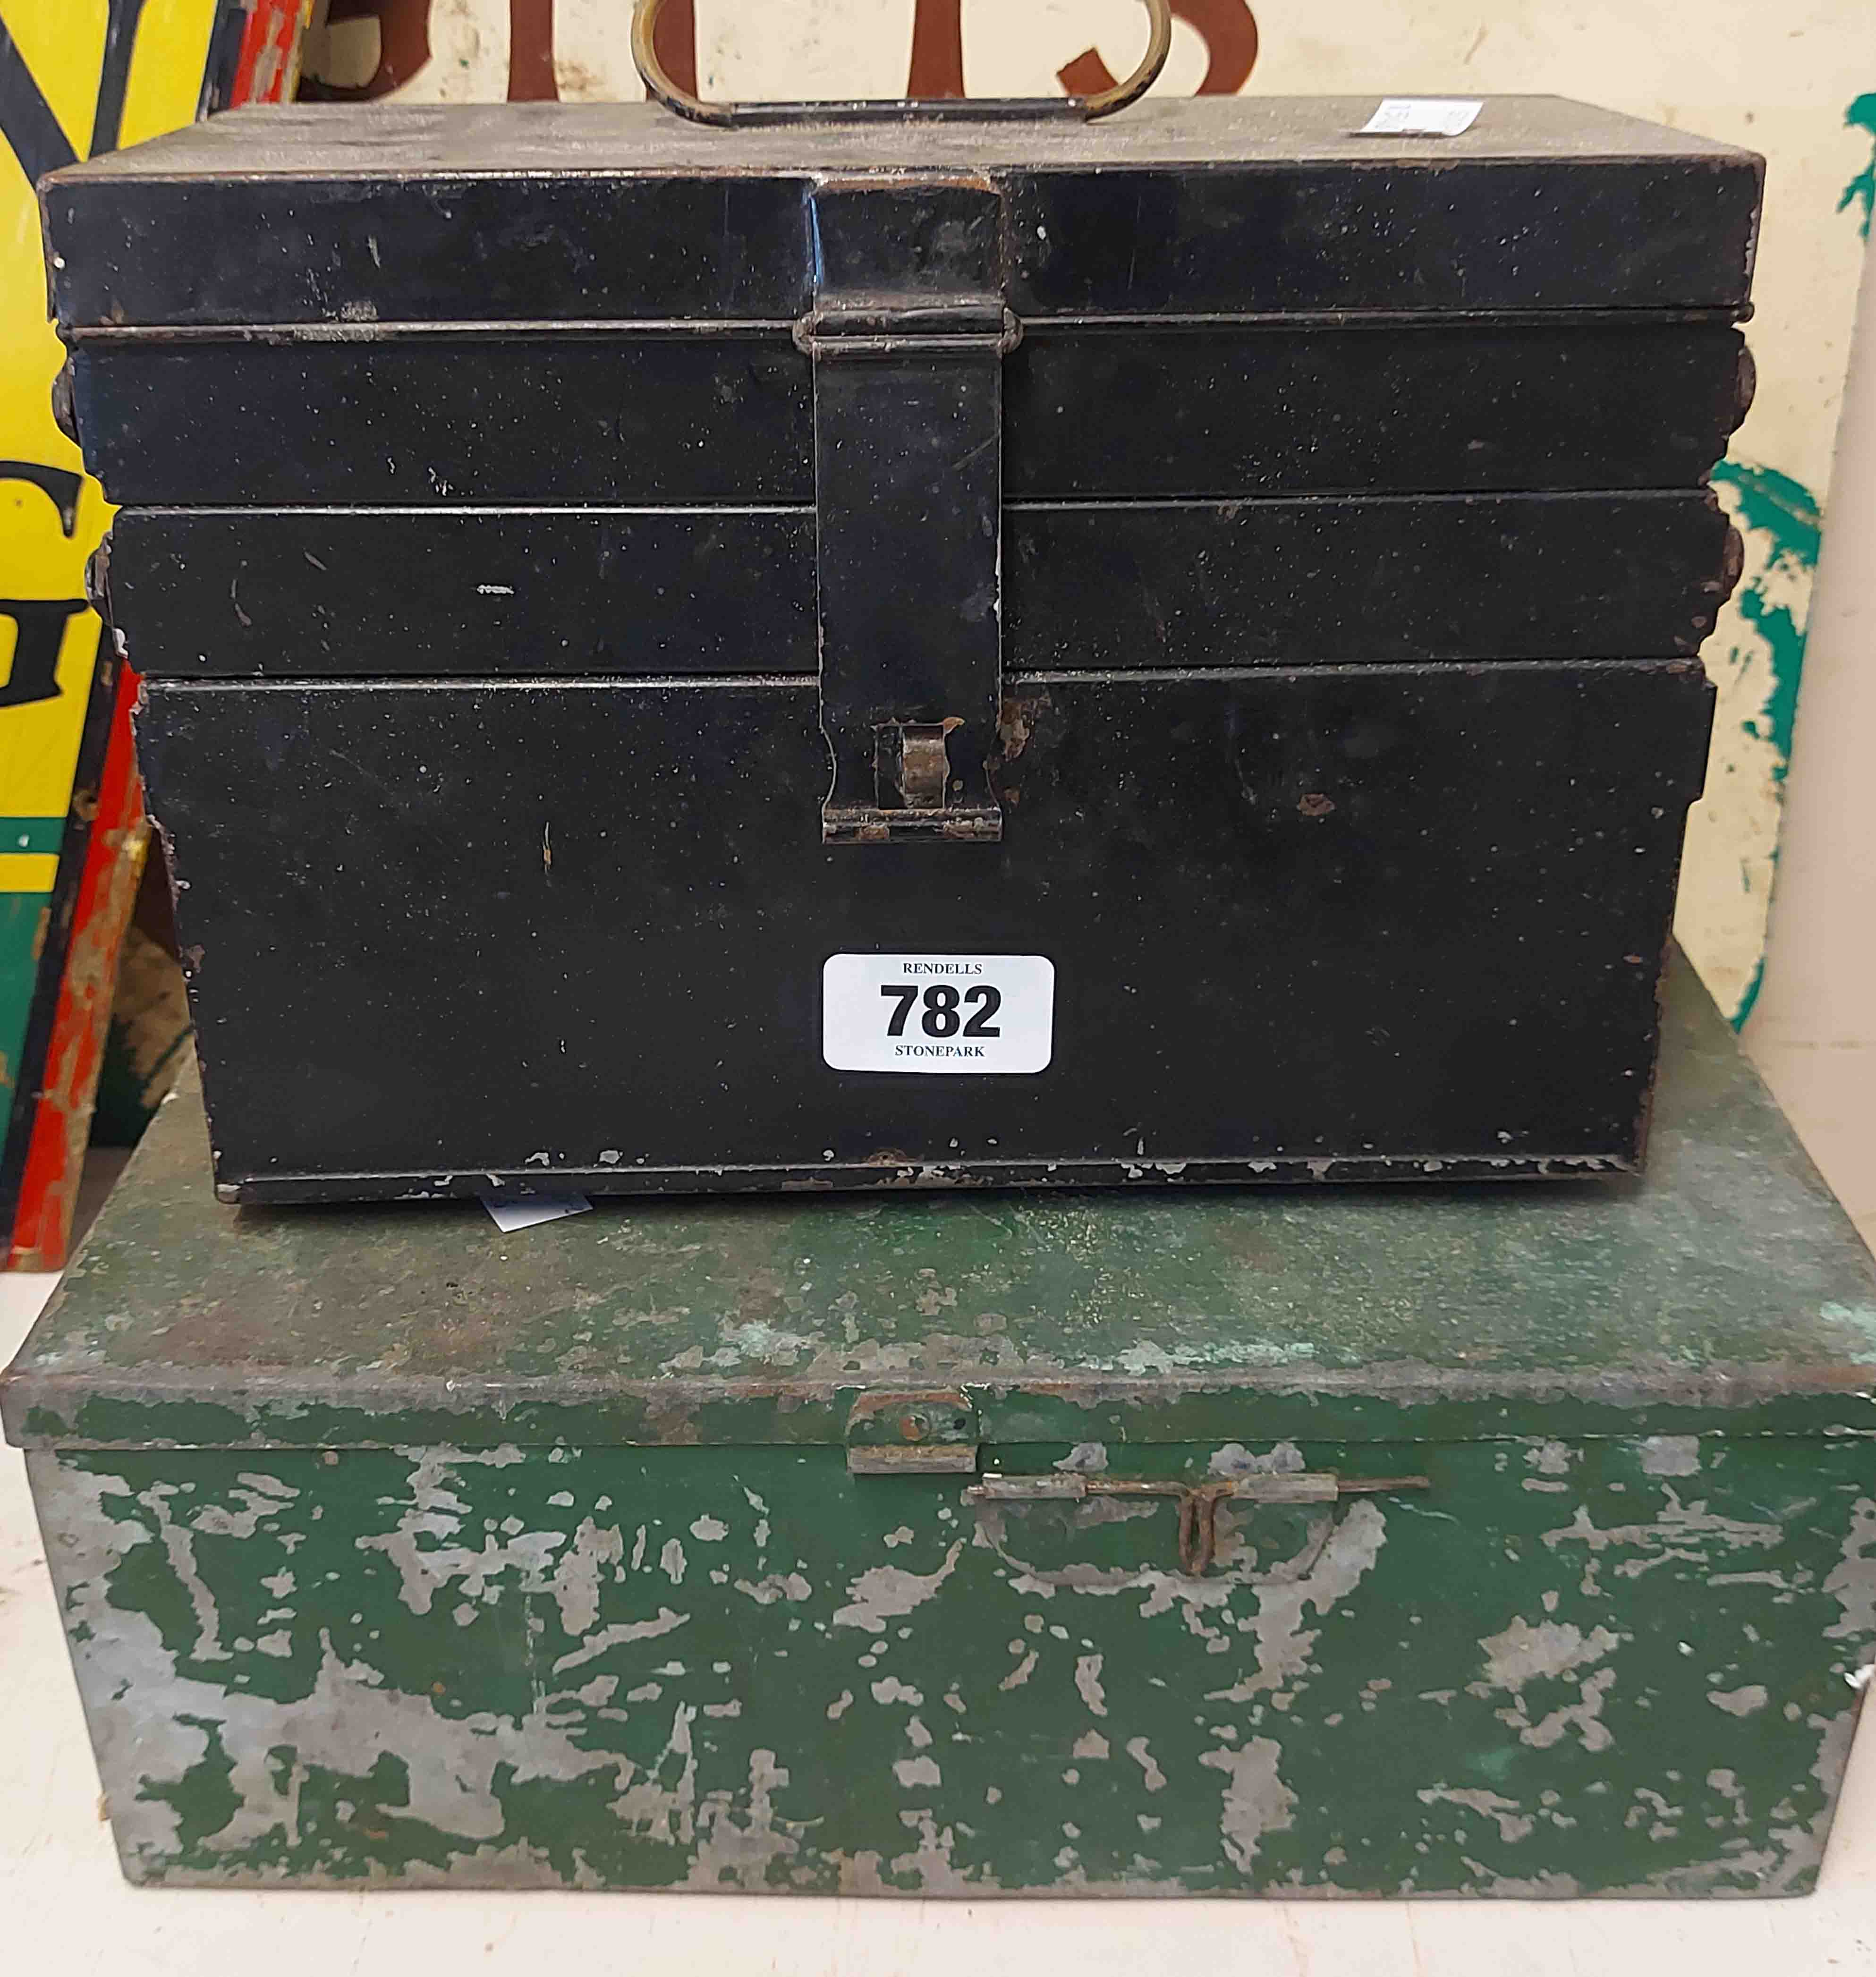 A vintage metal concertina fishing tackle box - sold with a green metal similar